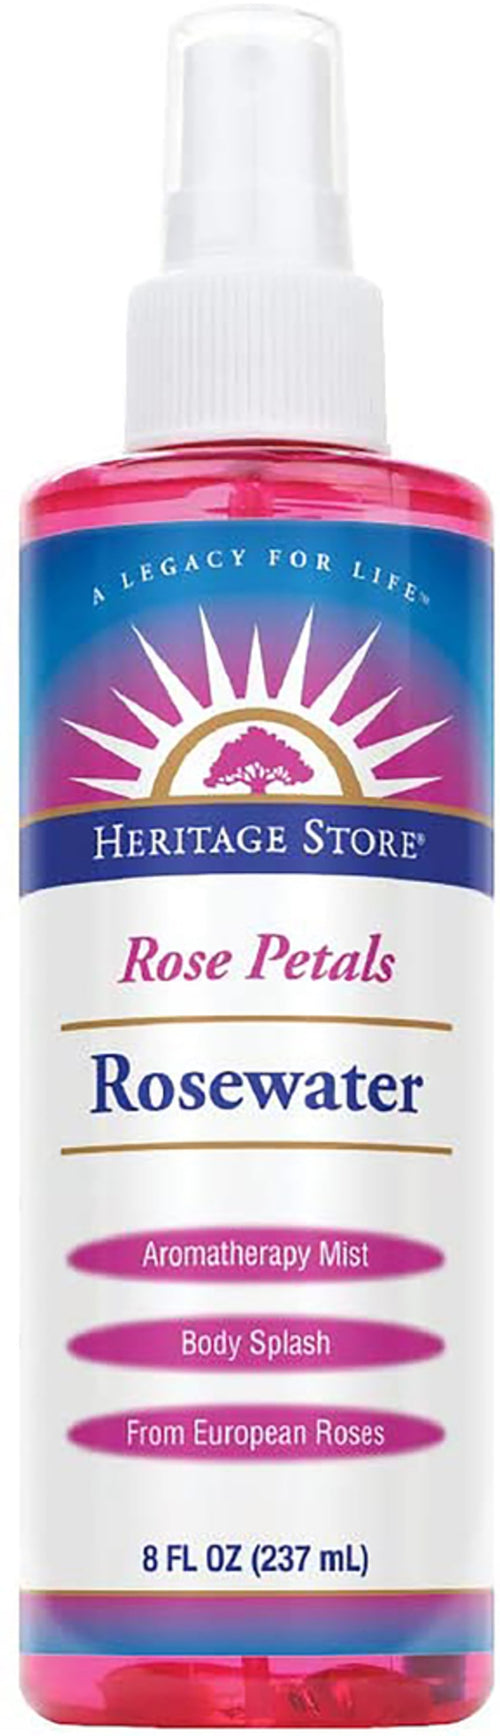 Acqua di rose da petali di rosa 8 fl oz 237 mL Bottiglia    